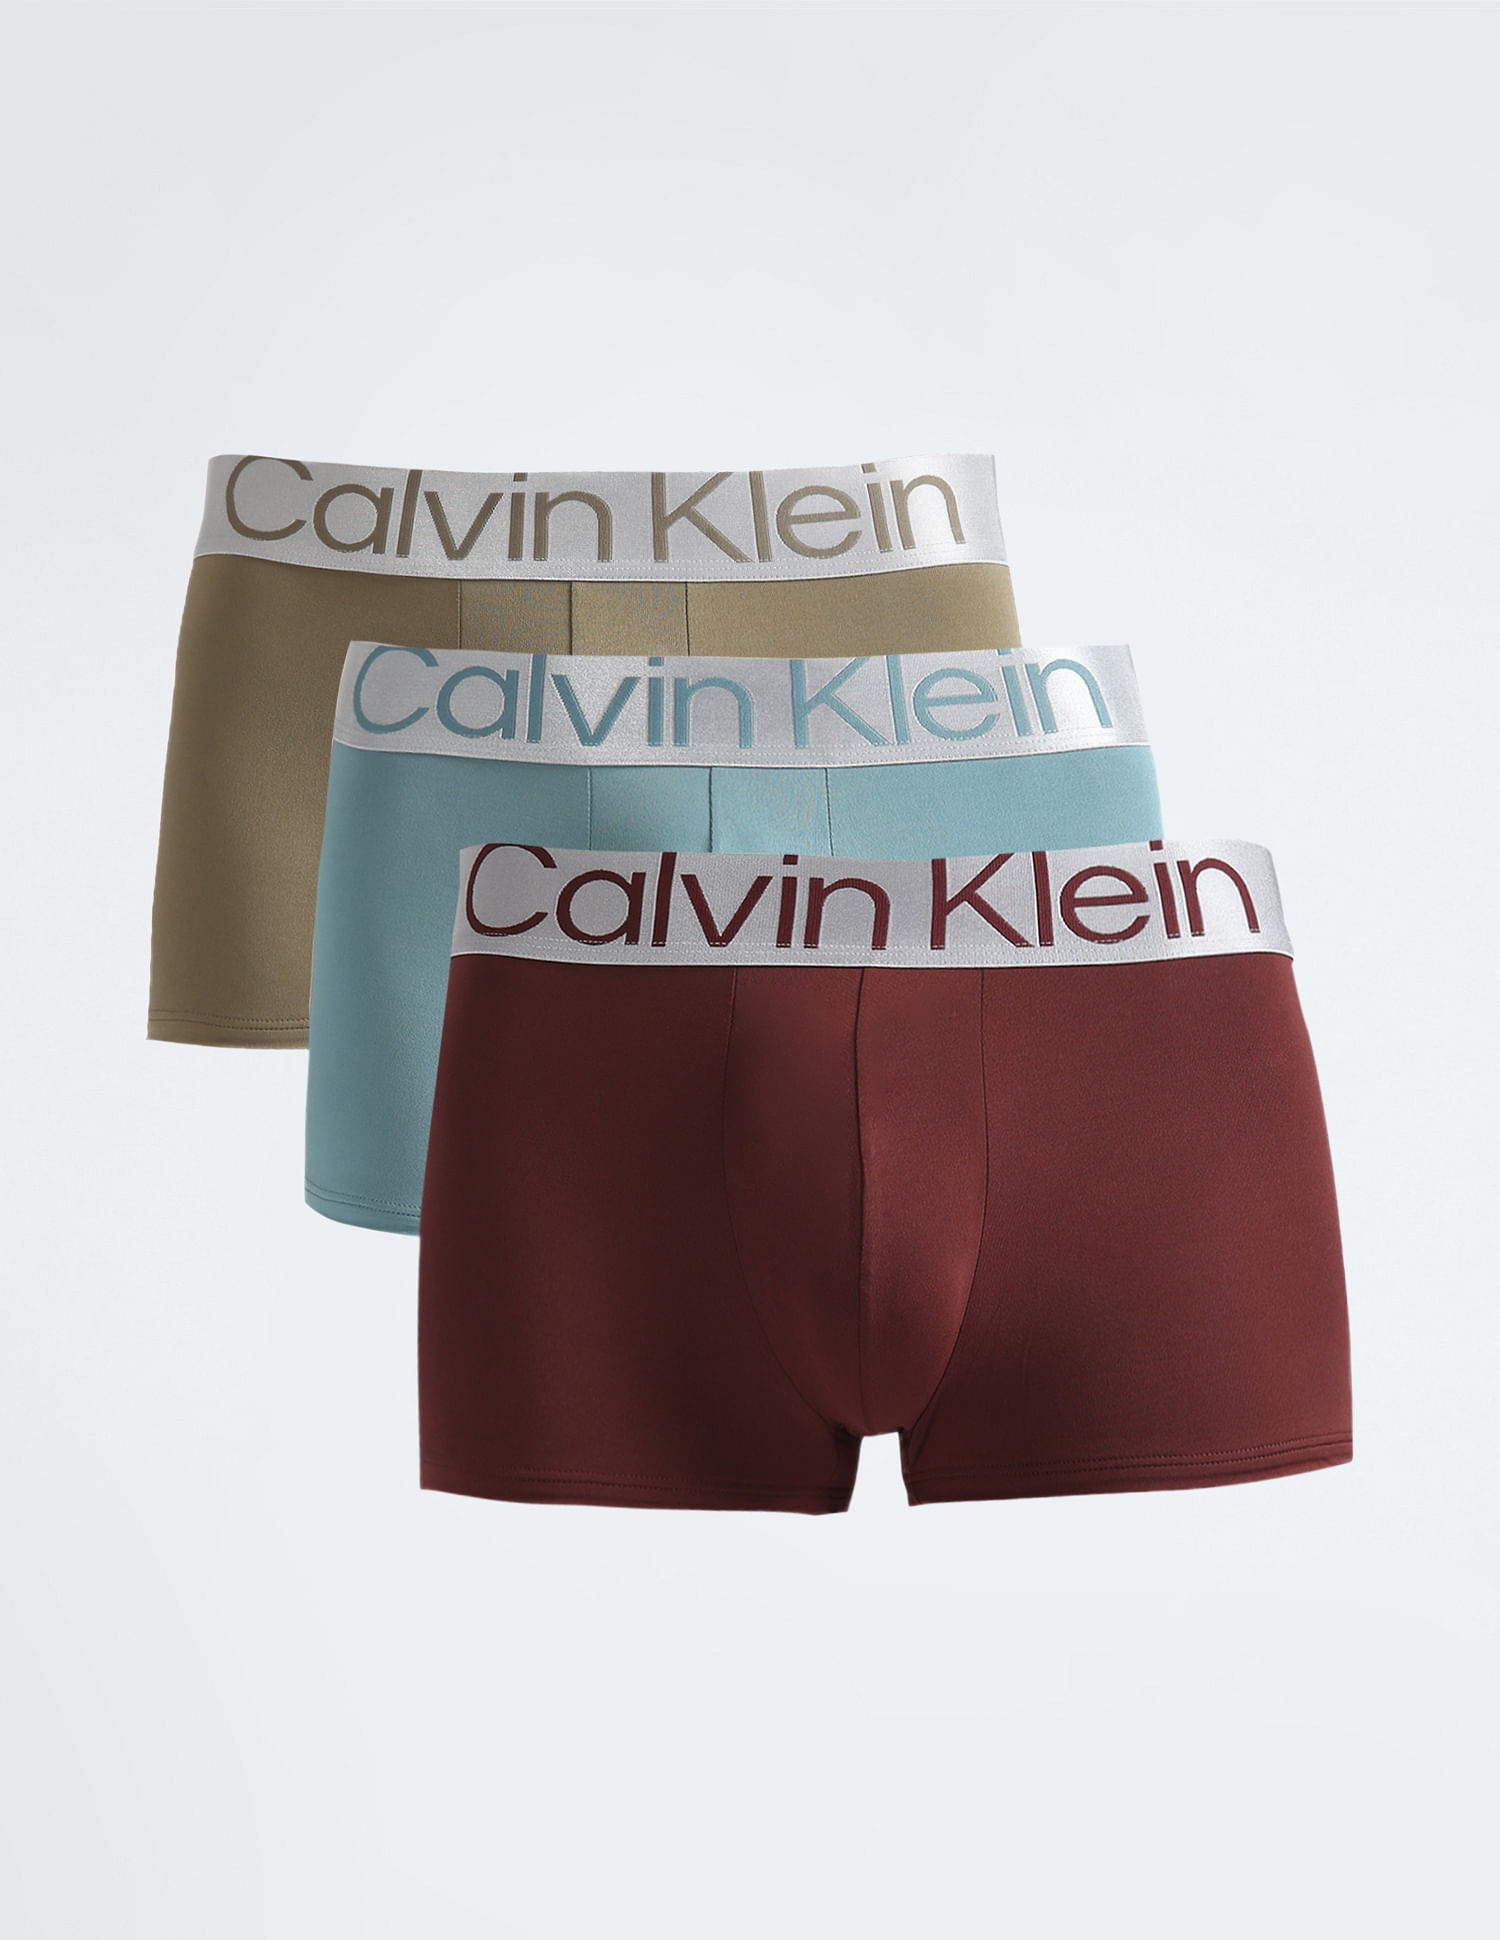 Lycra Cotton Printed C.k. Men Underwear, Type: Trunks at Rs 100